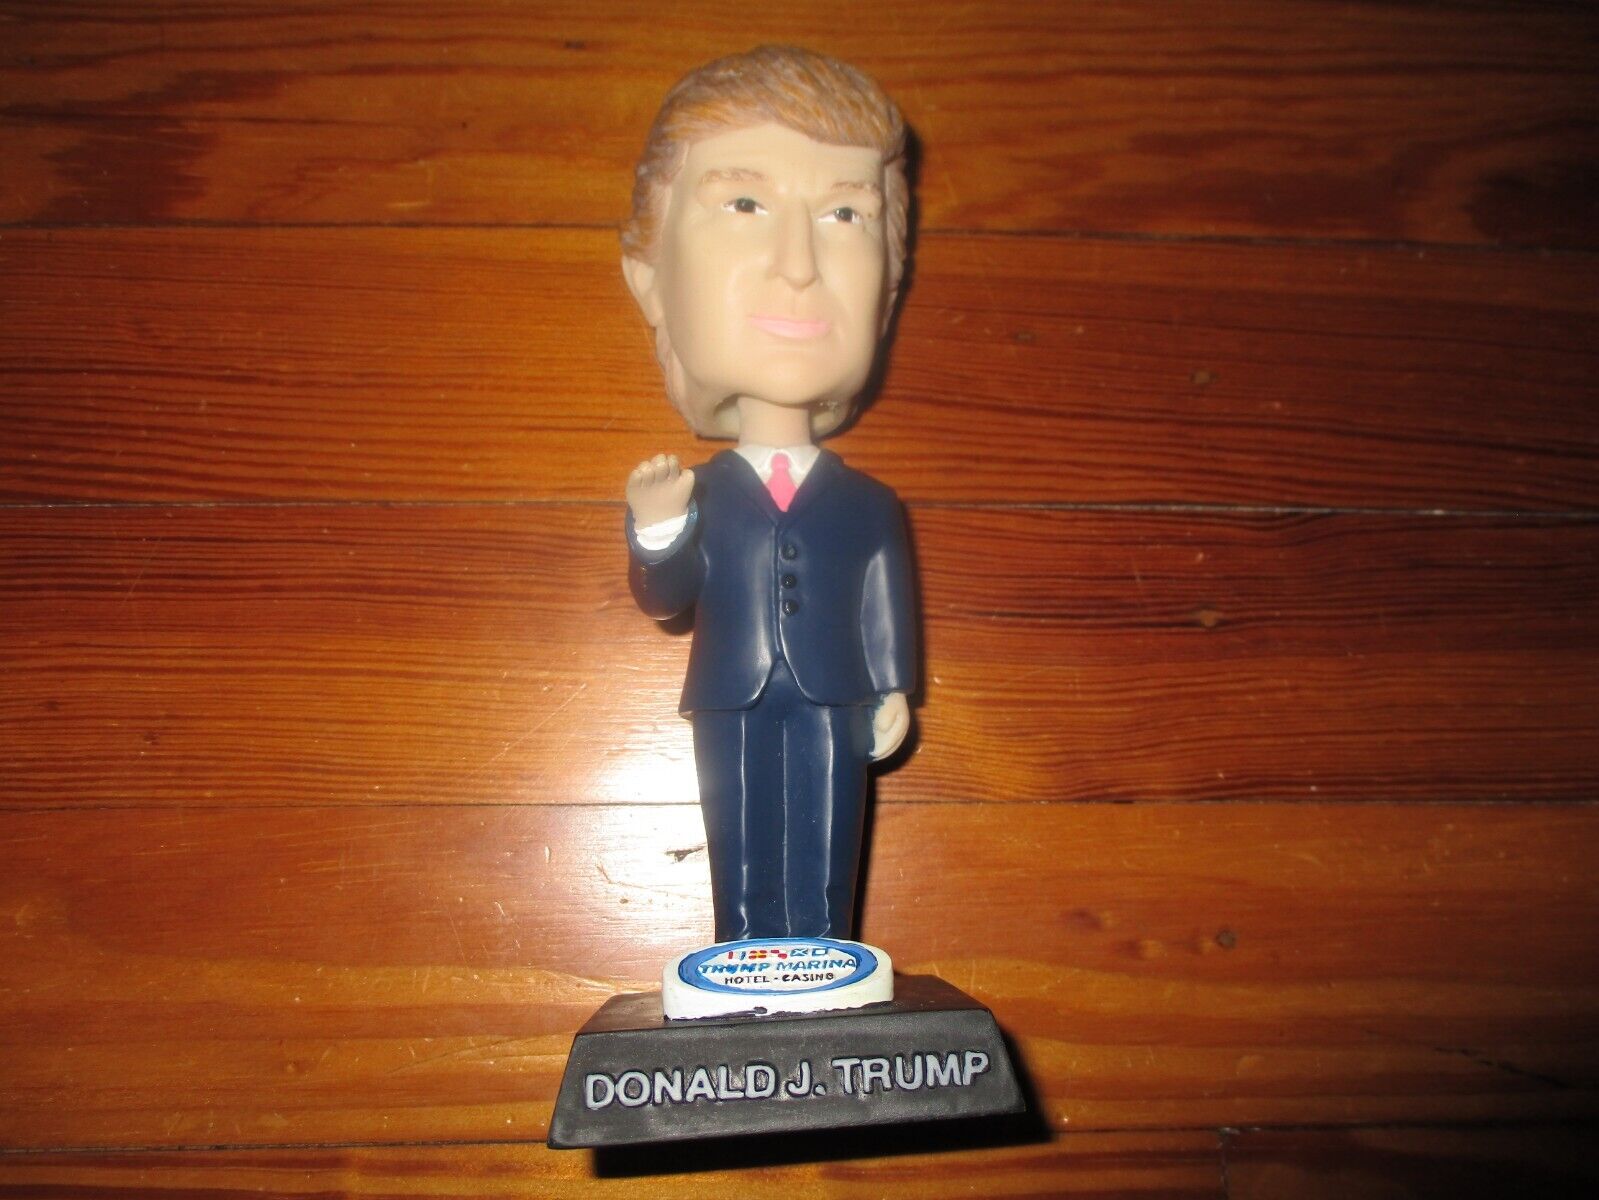 2004 Donald J Trump Bobble Head Figurine Trump Marina Hotel-Casino - Mint